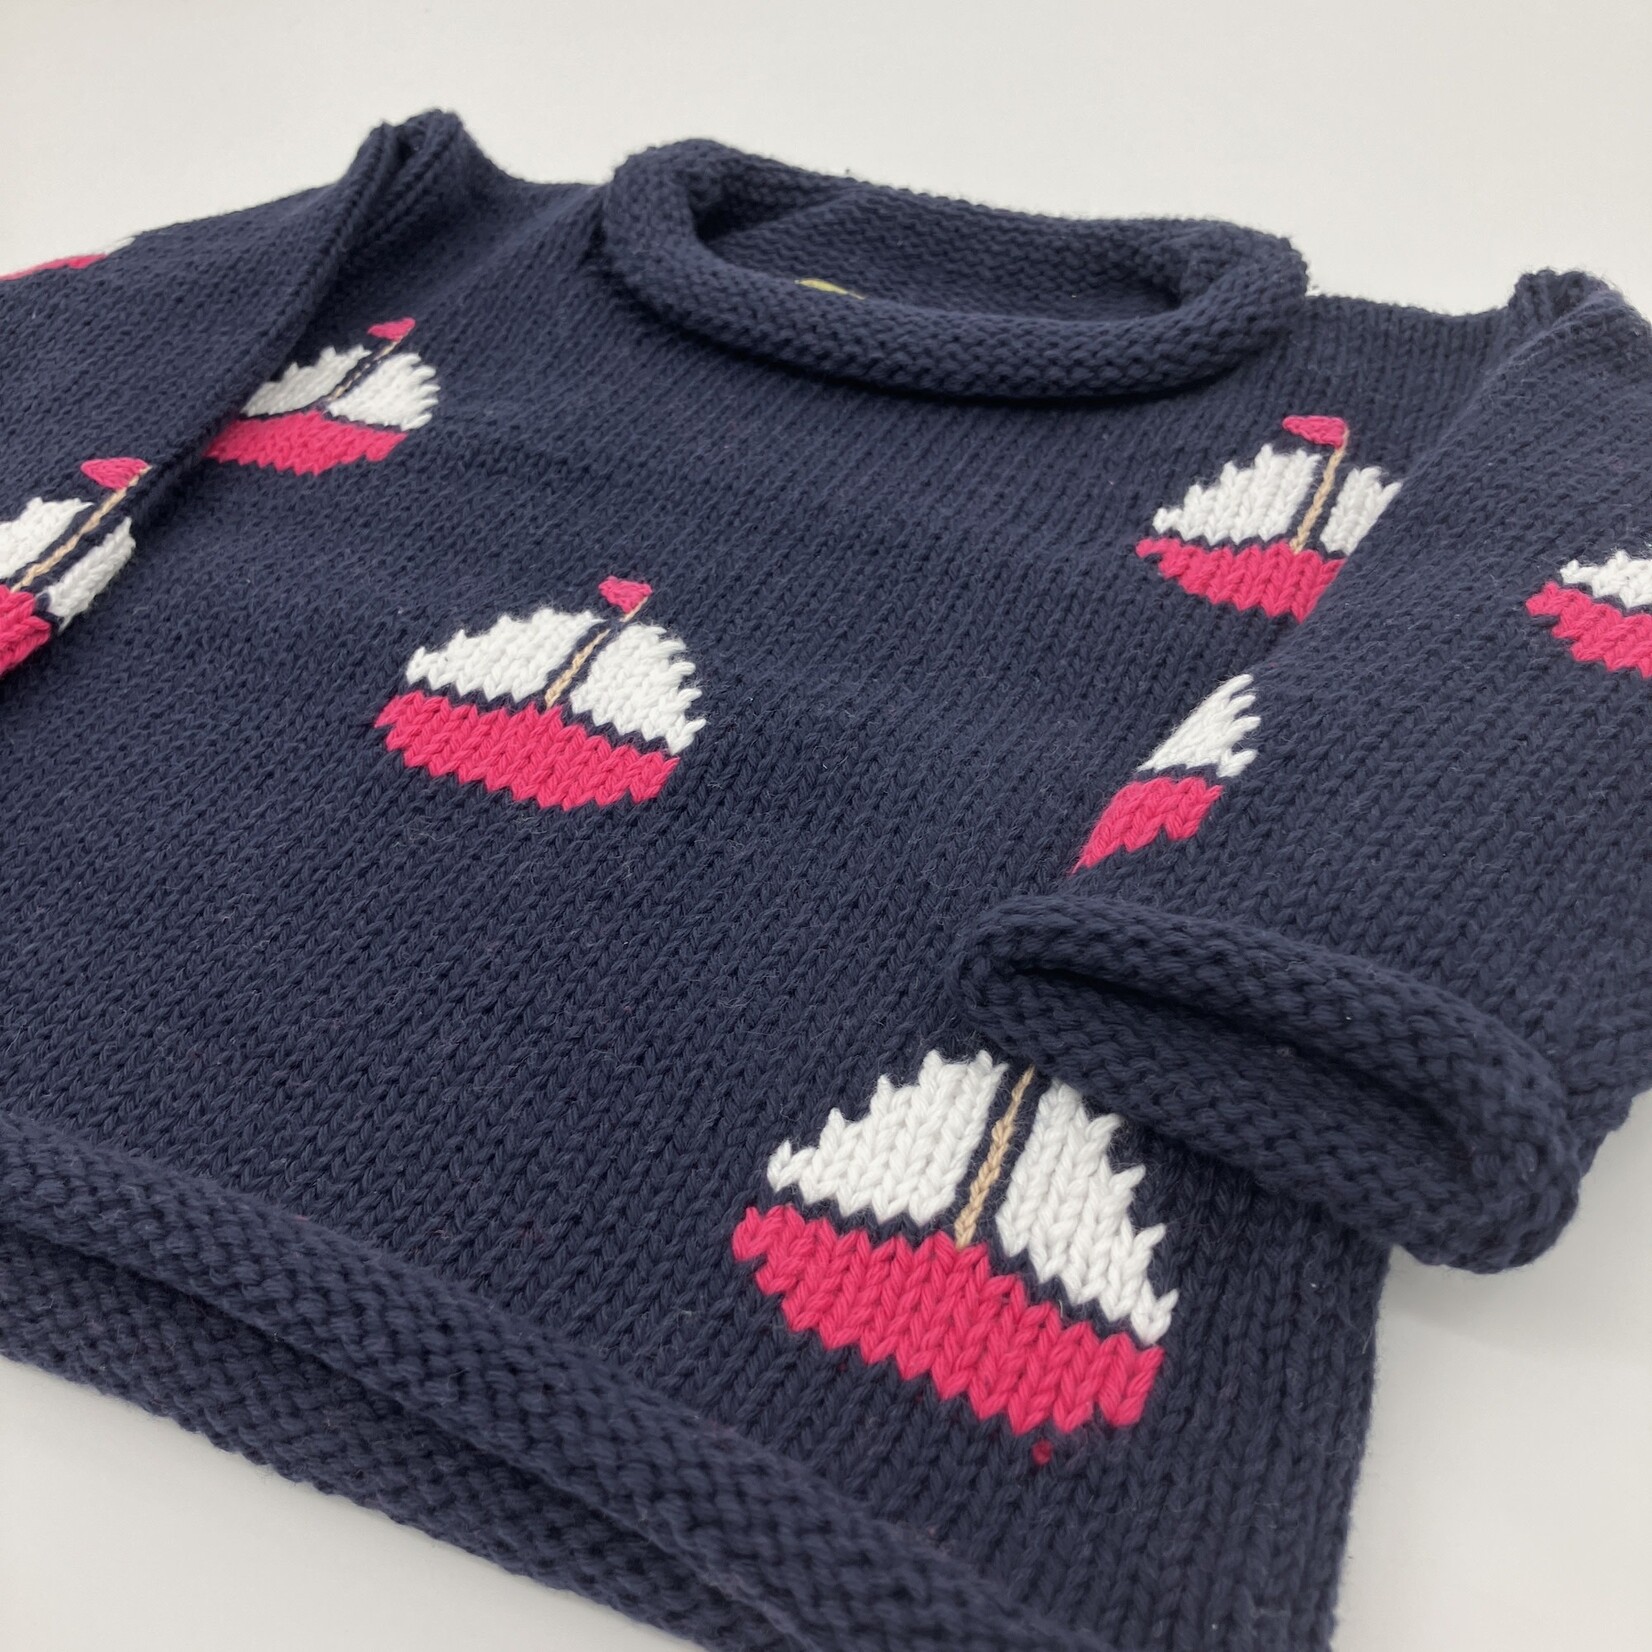 ACVISA/CLAVER Navy Sweater with Pink Sailboat